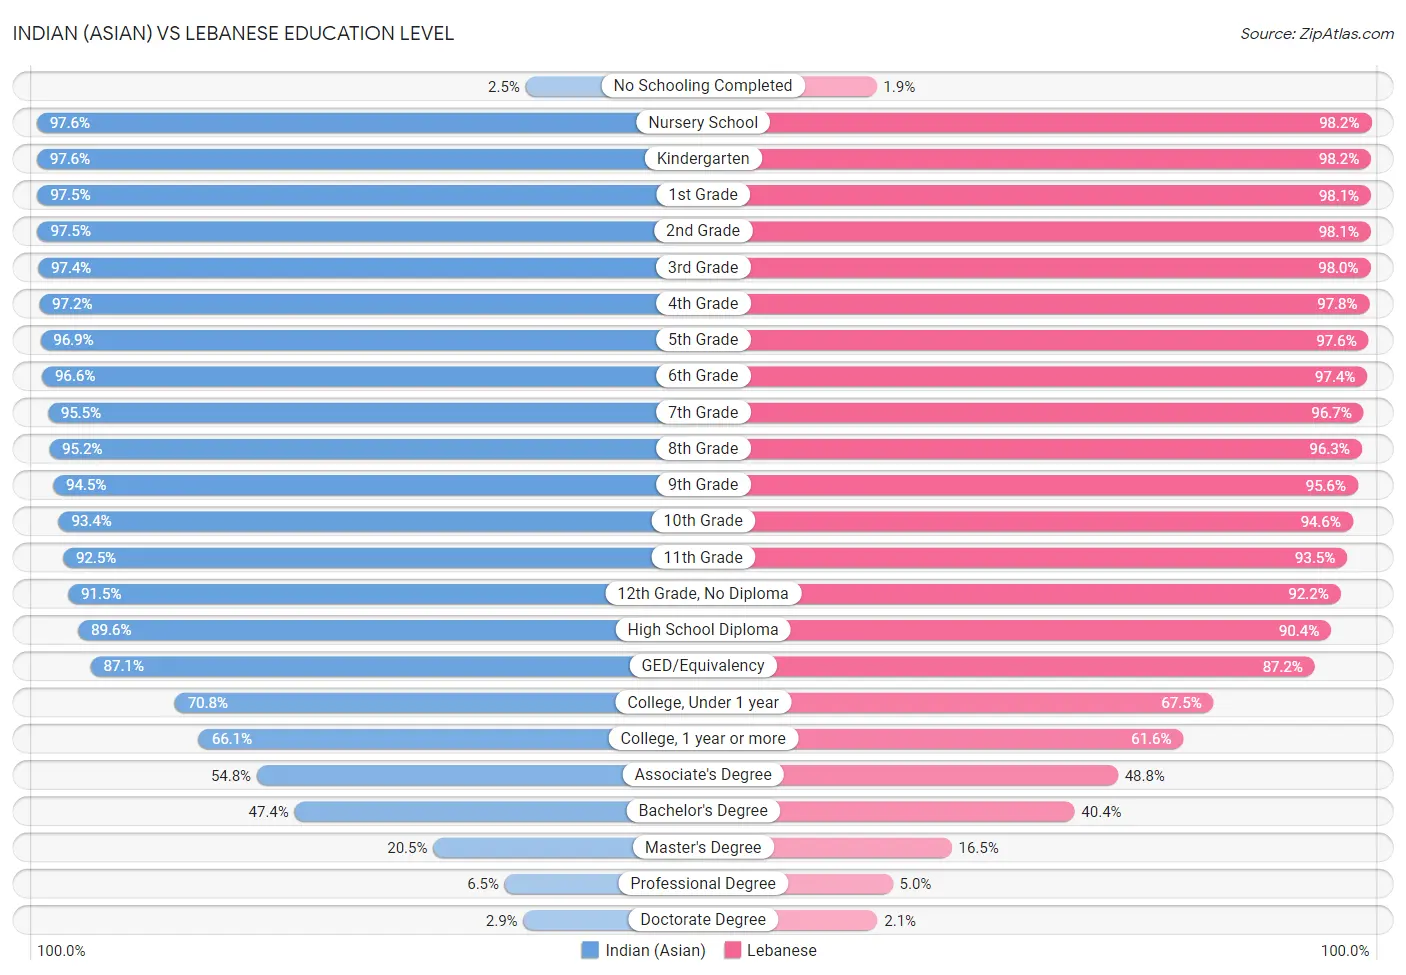 Indian (Asian) vs Lebanese Education Level